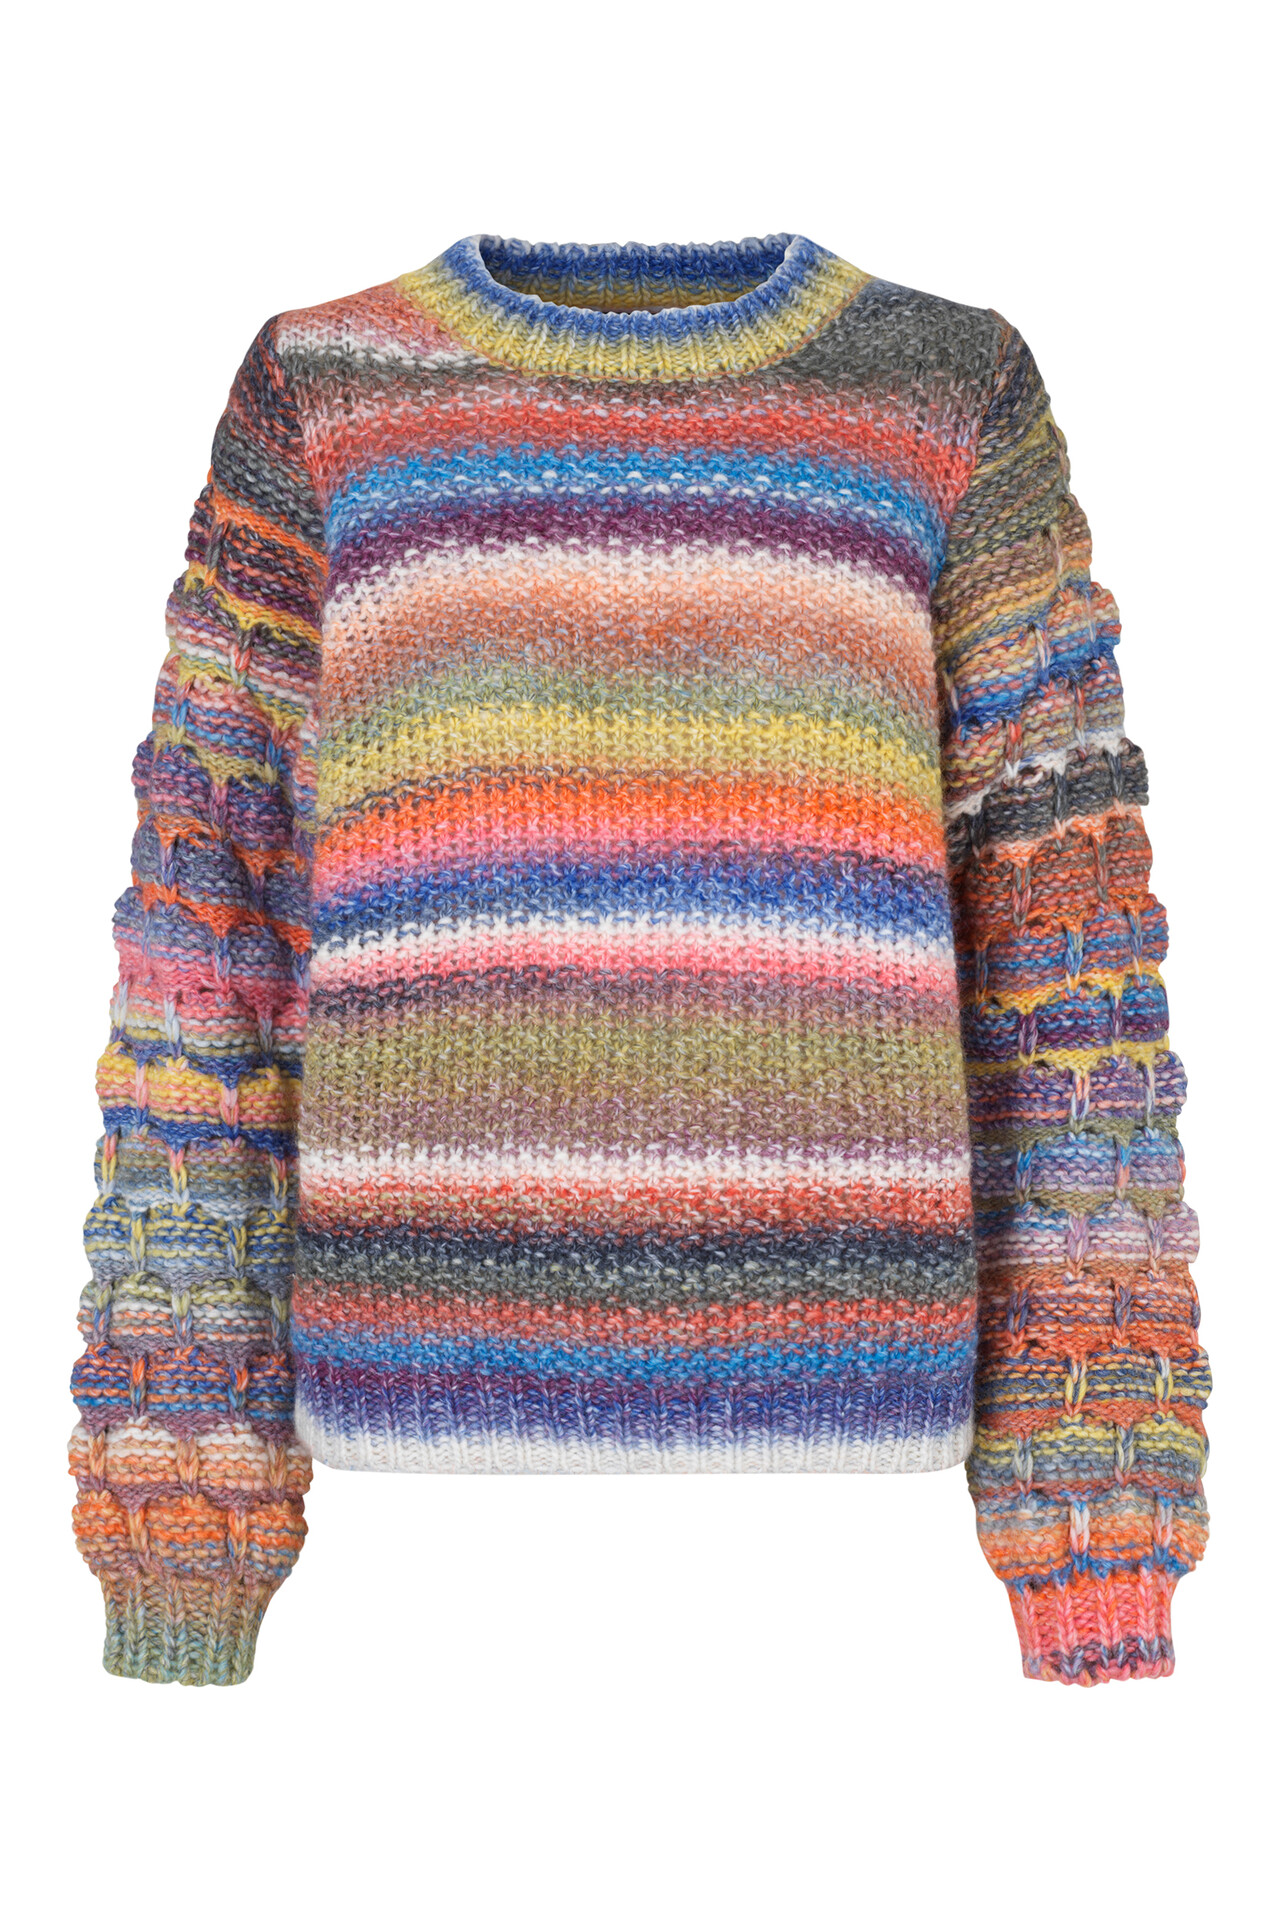 Bumble sweater » Køb den her